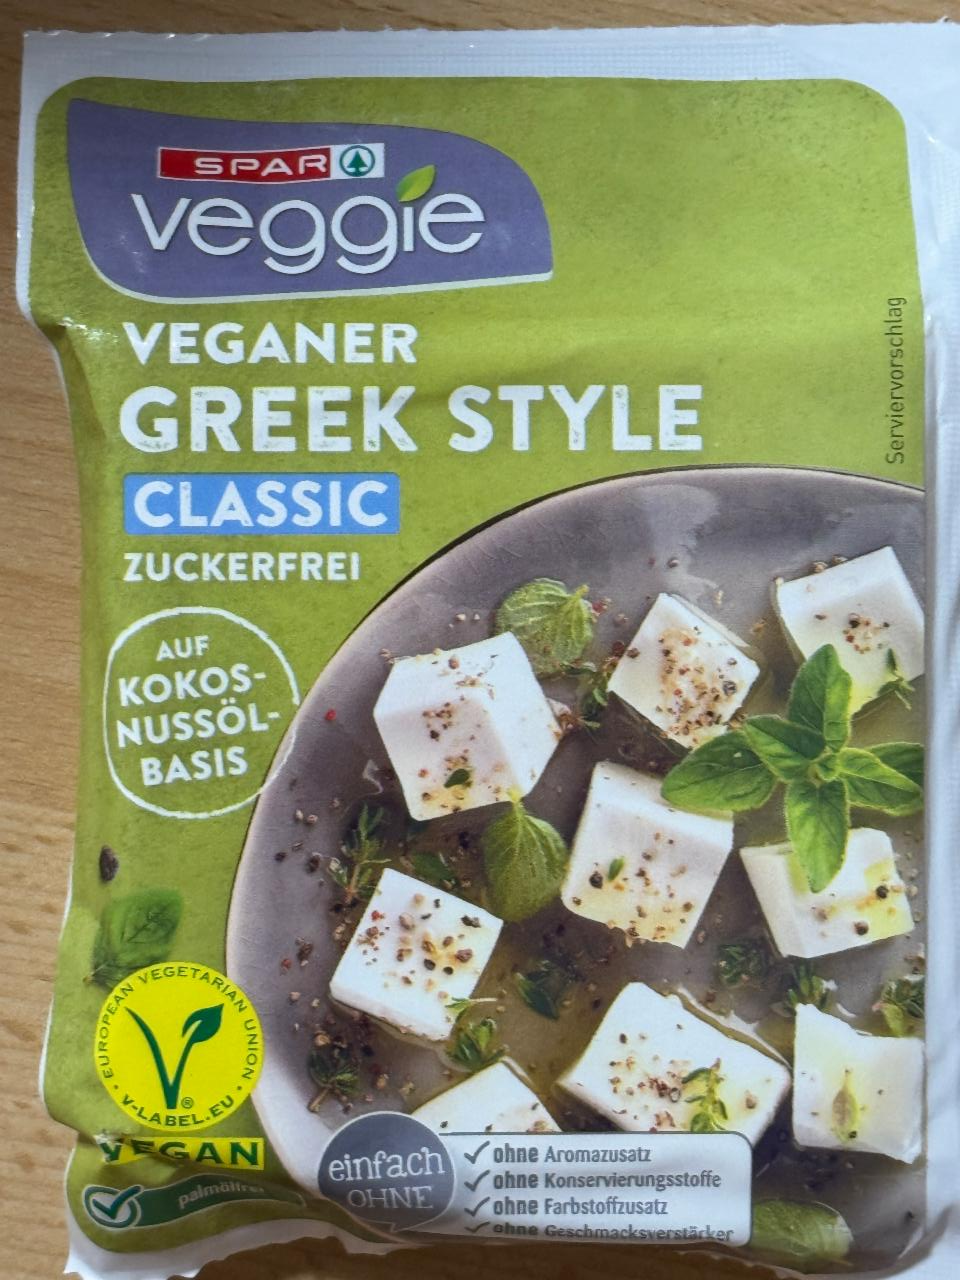 Fotografie - Veganer Greek Style Classic Spar veggie